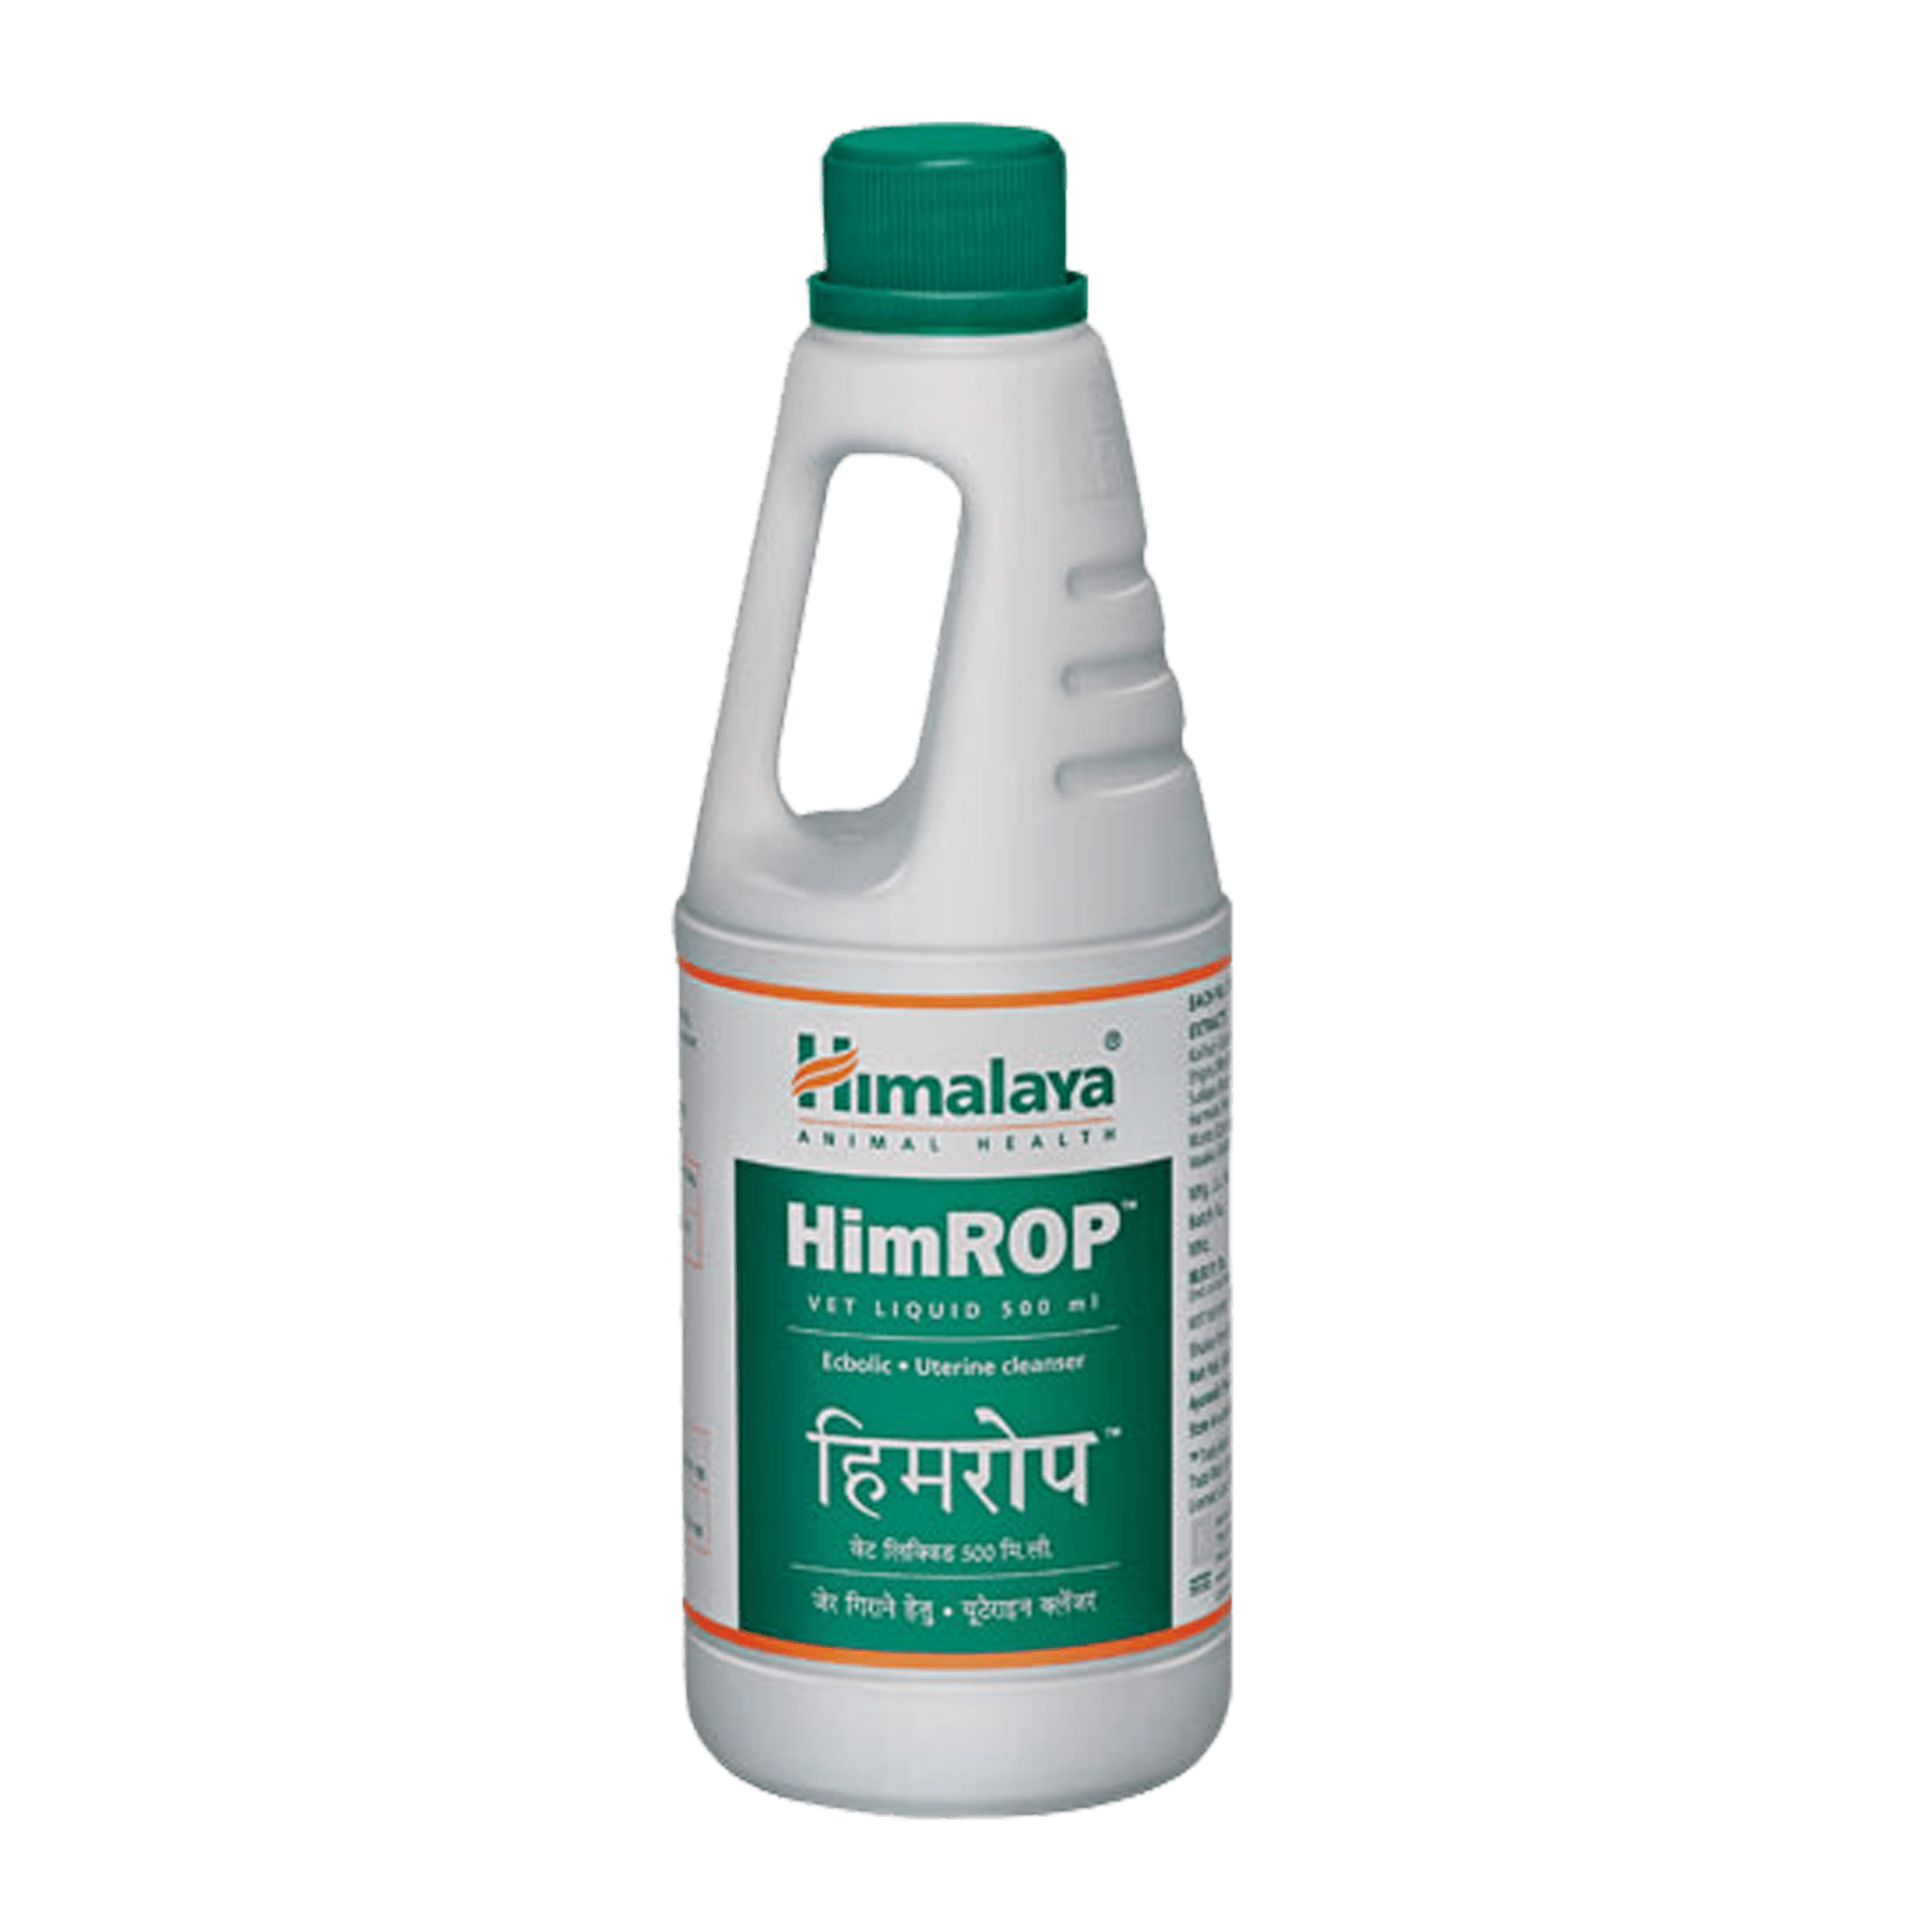 Himalaya HimROP Vet Liquid - Ecbolic and Uterine cleanser 